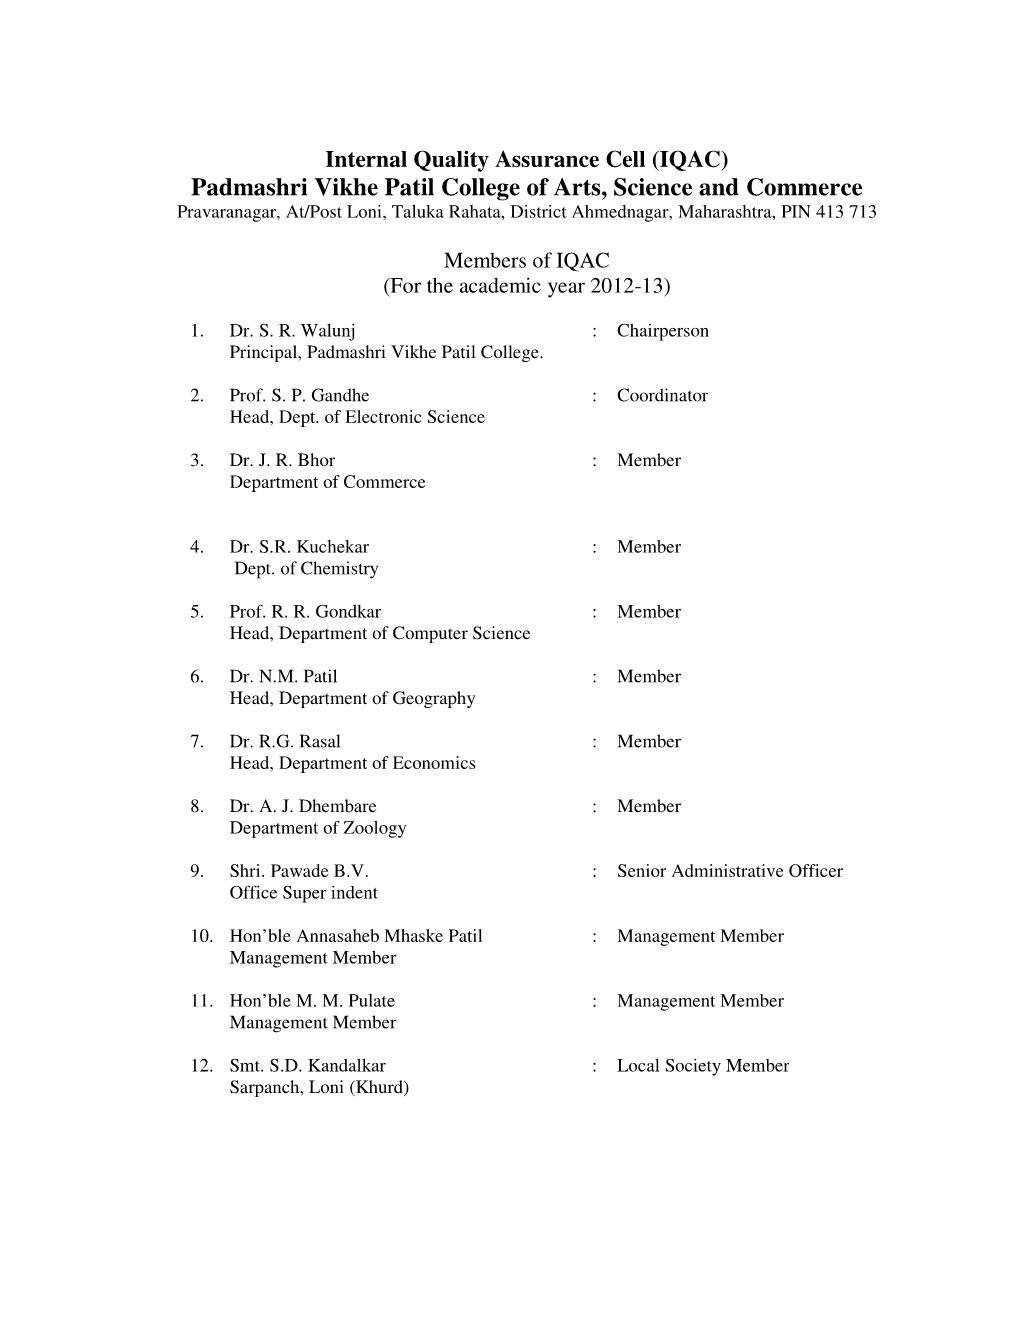 Padmashri Vikhe Patil College of Arts, Science and Commerce Pravaranagar, At/Post Loni, Taluka Rahata, District Ahmednagar, Maharashtra, PIN 413 713